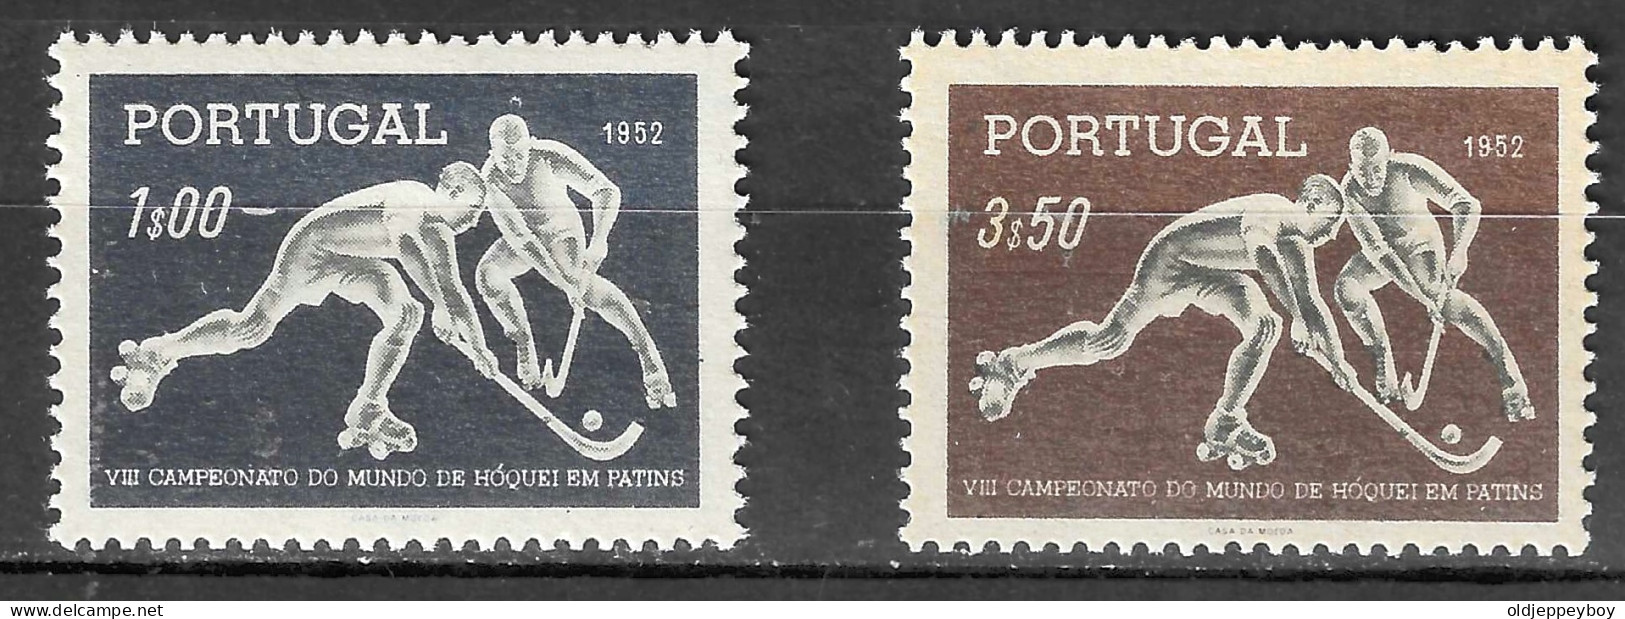 Portugal 1952 AF#751-752** Hockey On Roller Complete Set Sports MNH (3.50 STAMP WITH GUM DISTURBANCE) - Nuevos